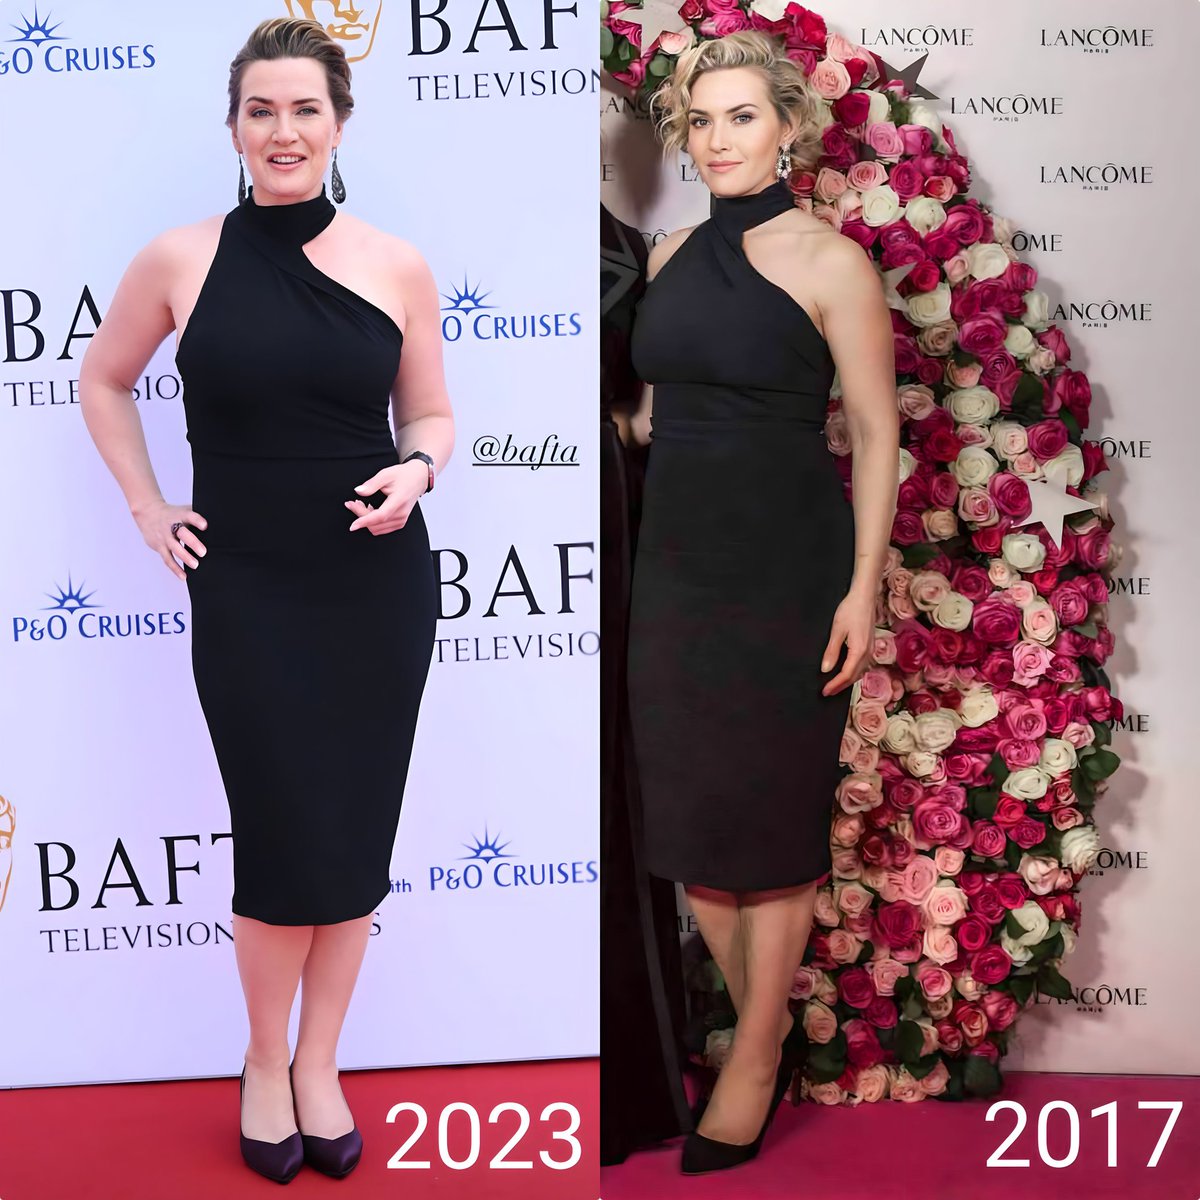 Kate Winslet Red-Carpet Rewear at The BAFTA TV Awards 2023
#katewinslet #sustainablefashion #BAFTATVAwards #BAFTA #miathreapleton #iamruth #channel4